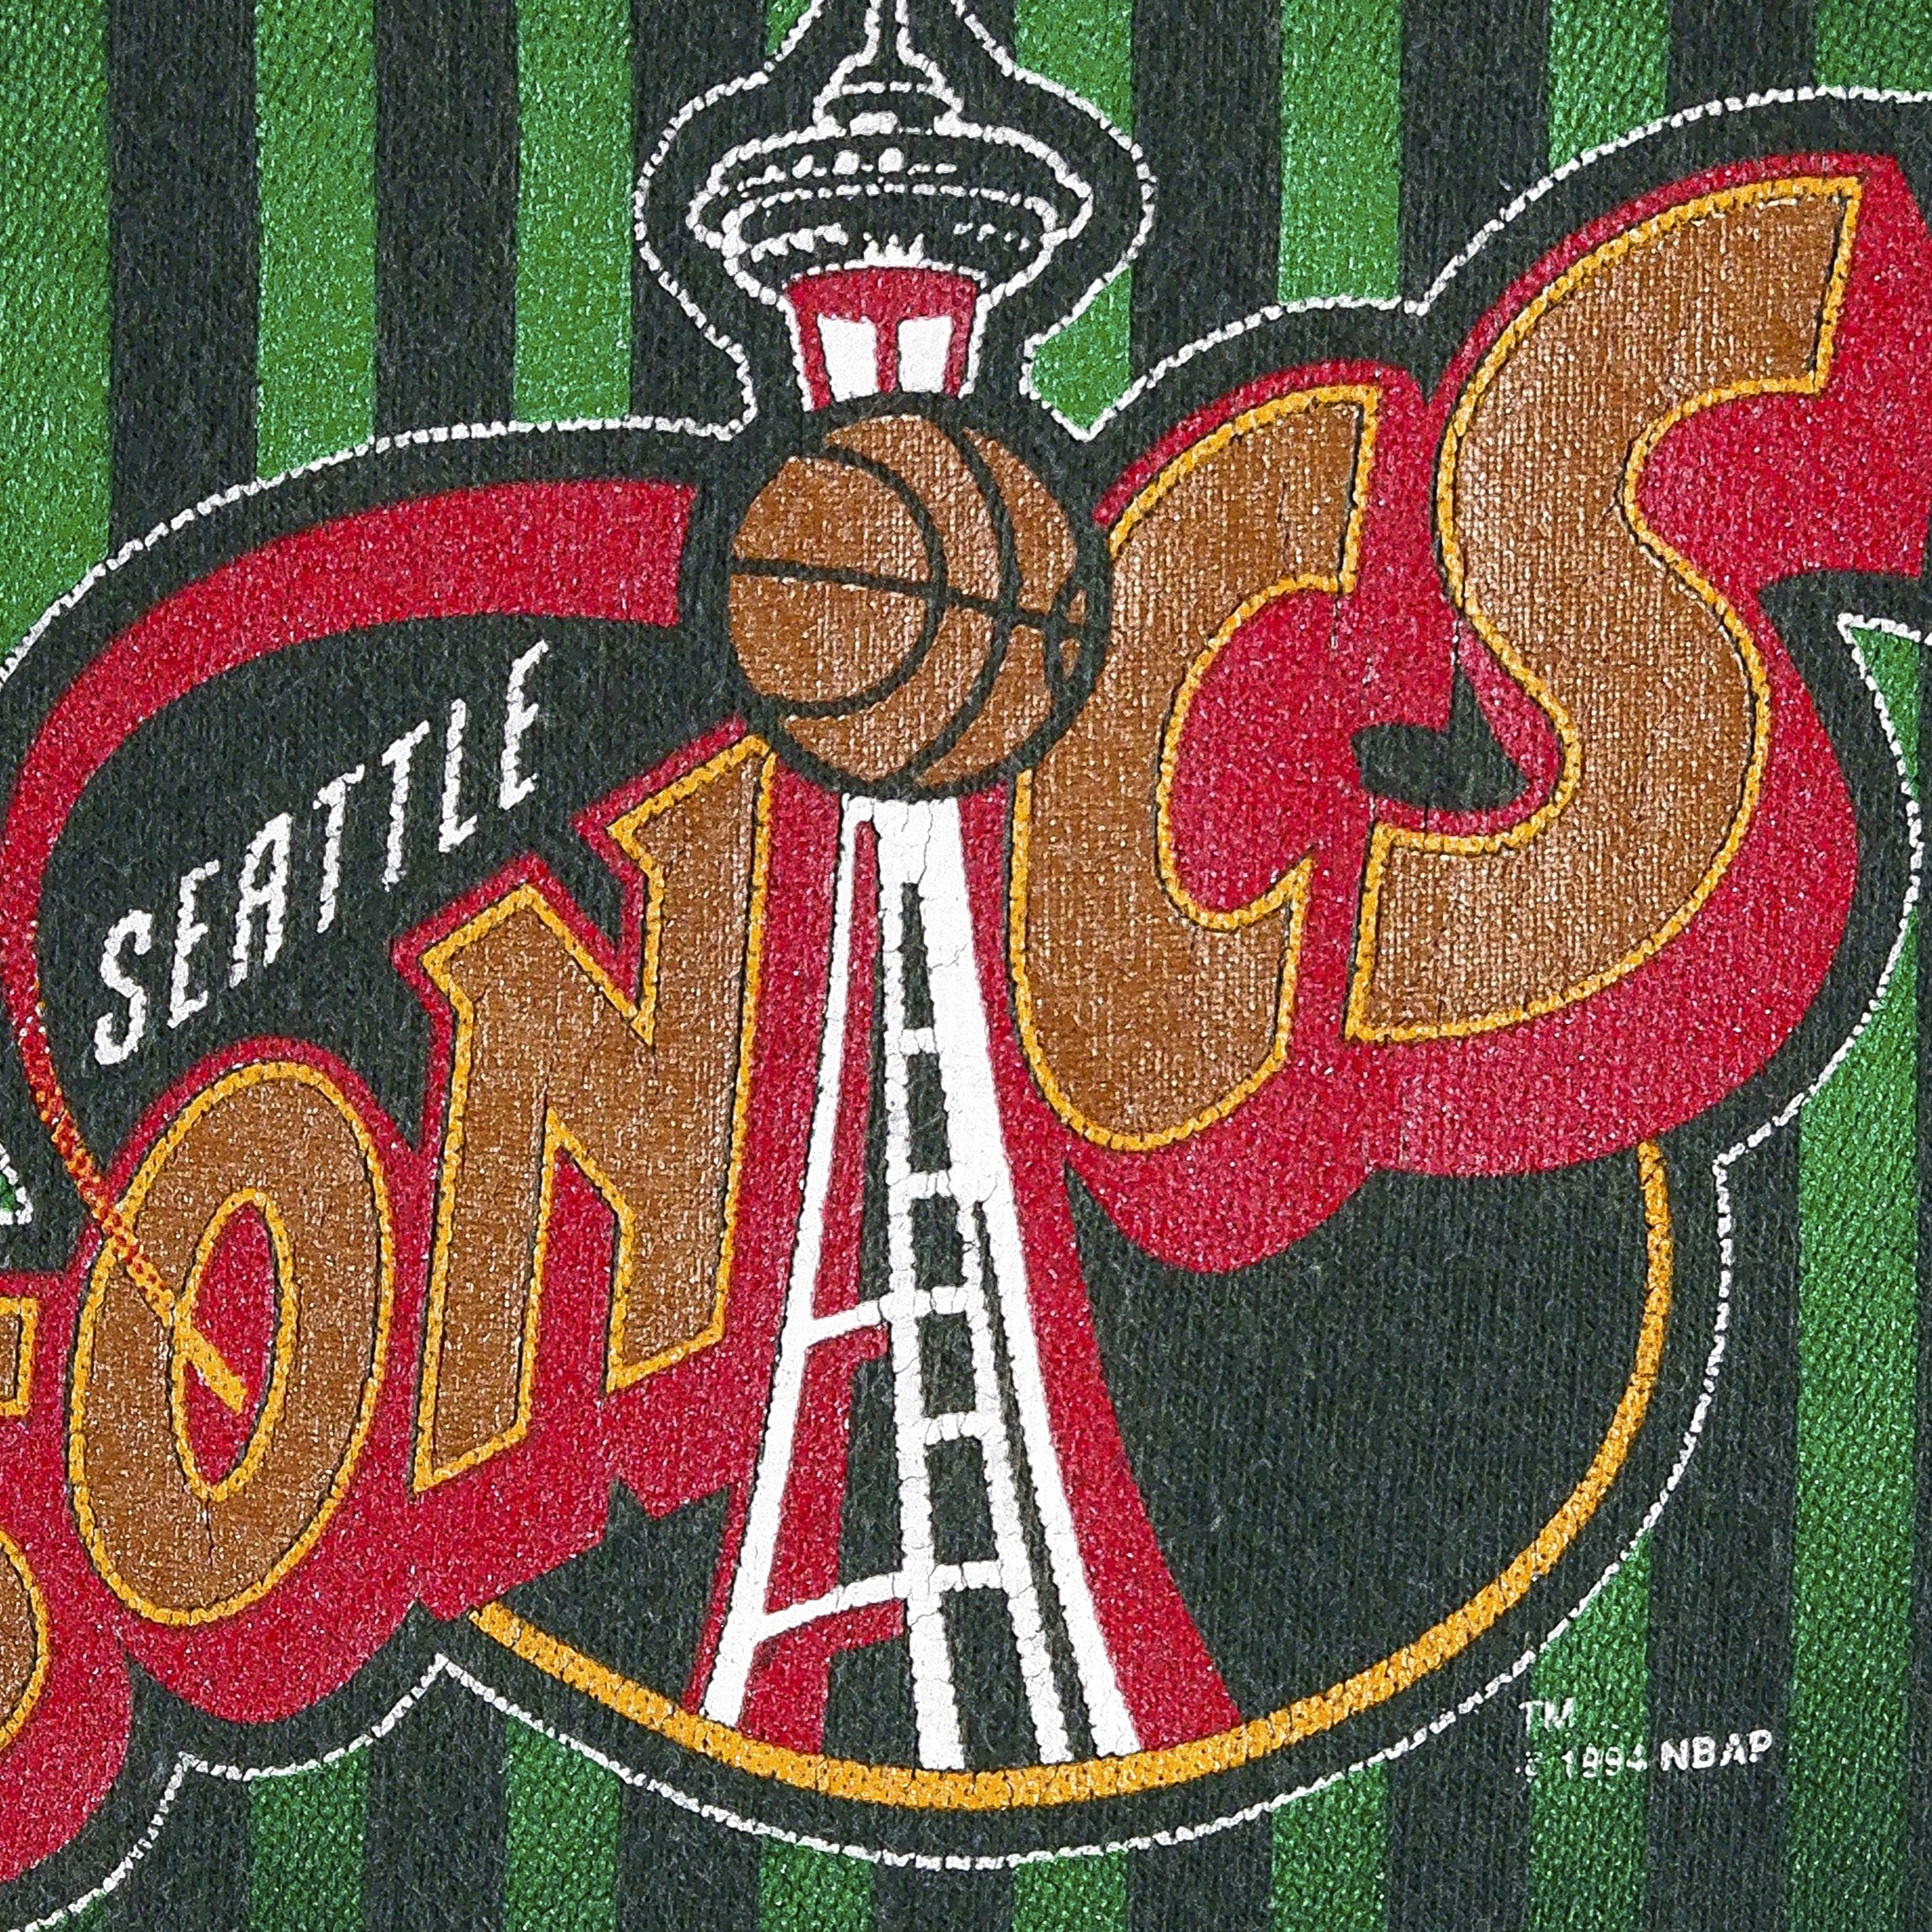 Seattle SuperSonics Jerseys & Teamwear, NBA Merch